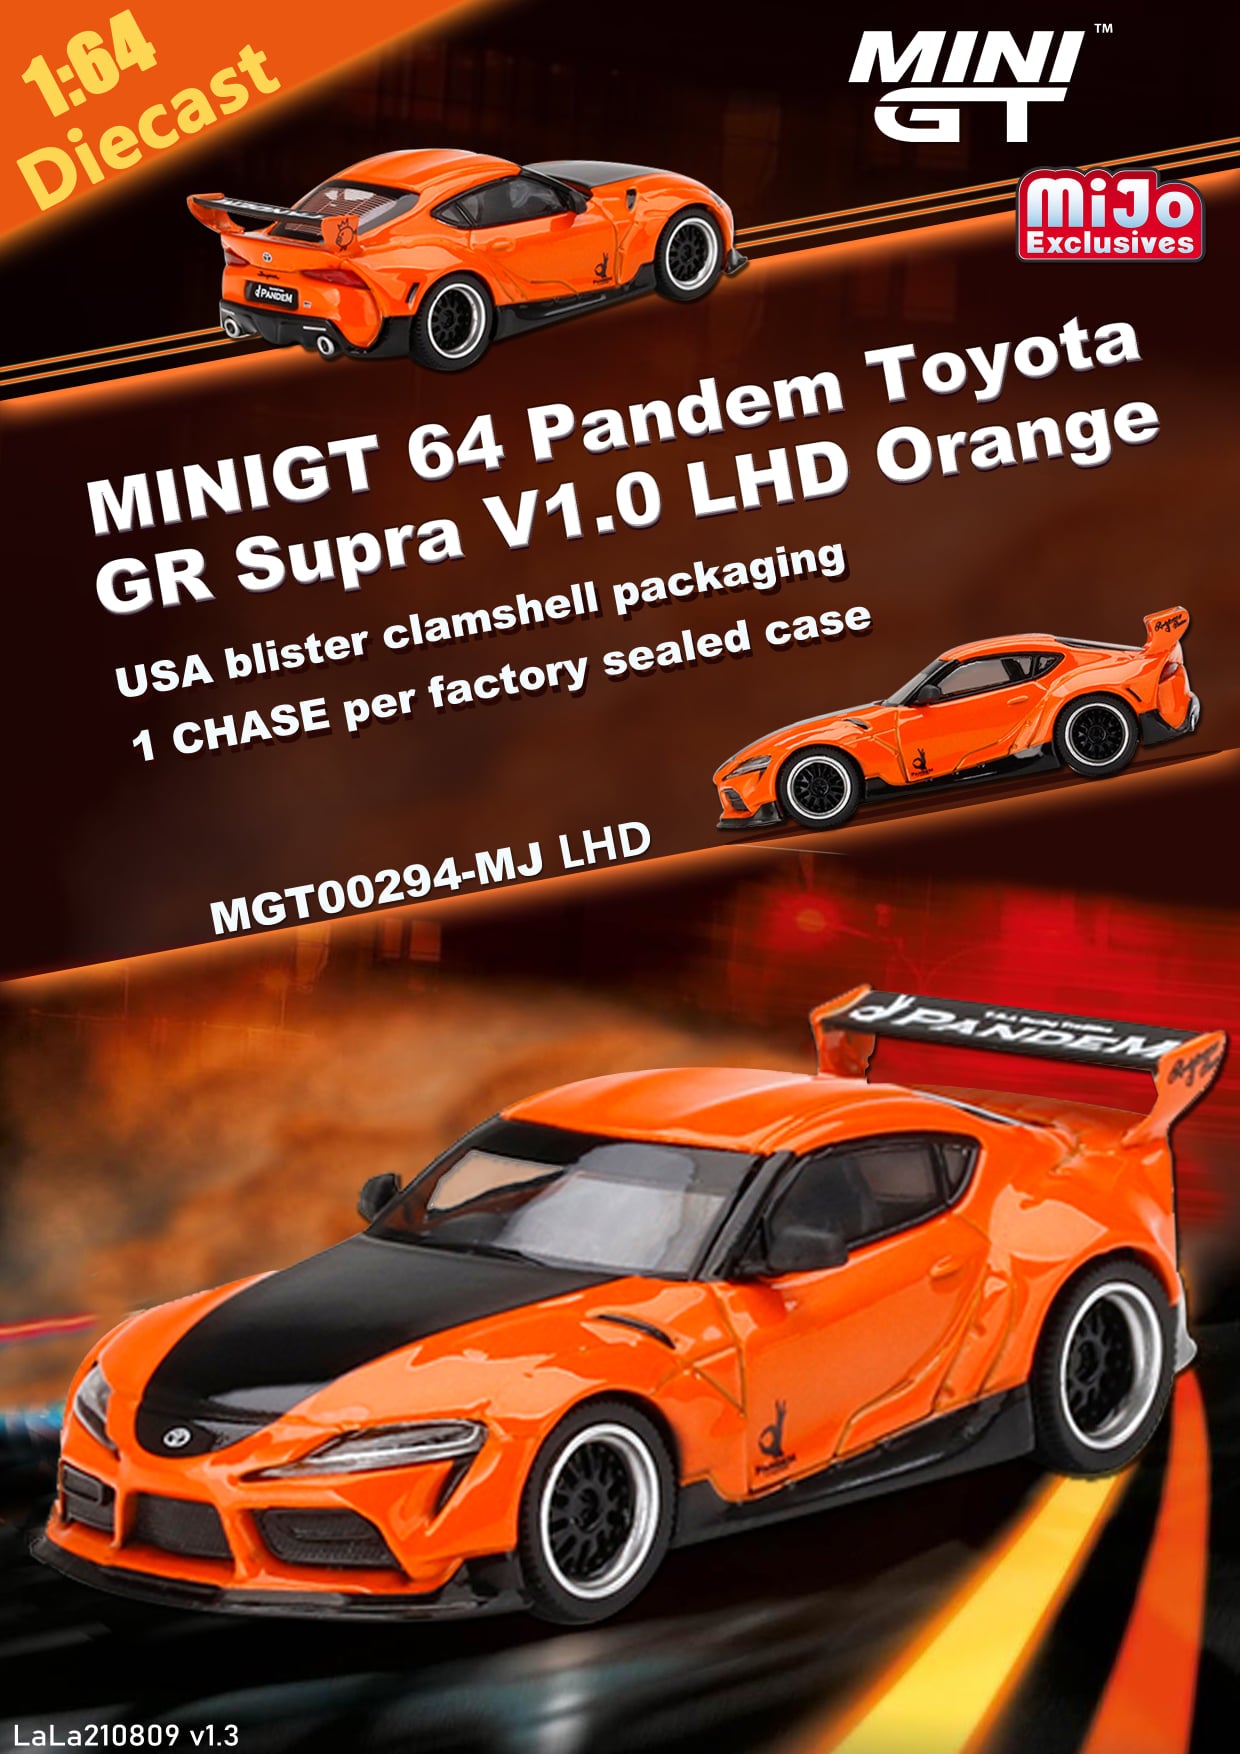 Mini GT x Mijo Exclusive 1:64 Scale Pandem Toyota GR Supra (A90) Orange